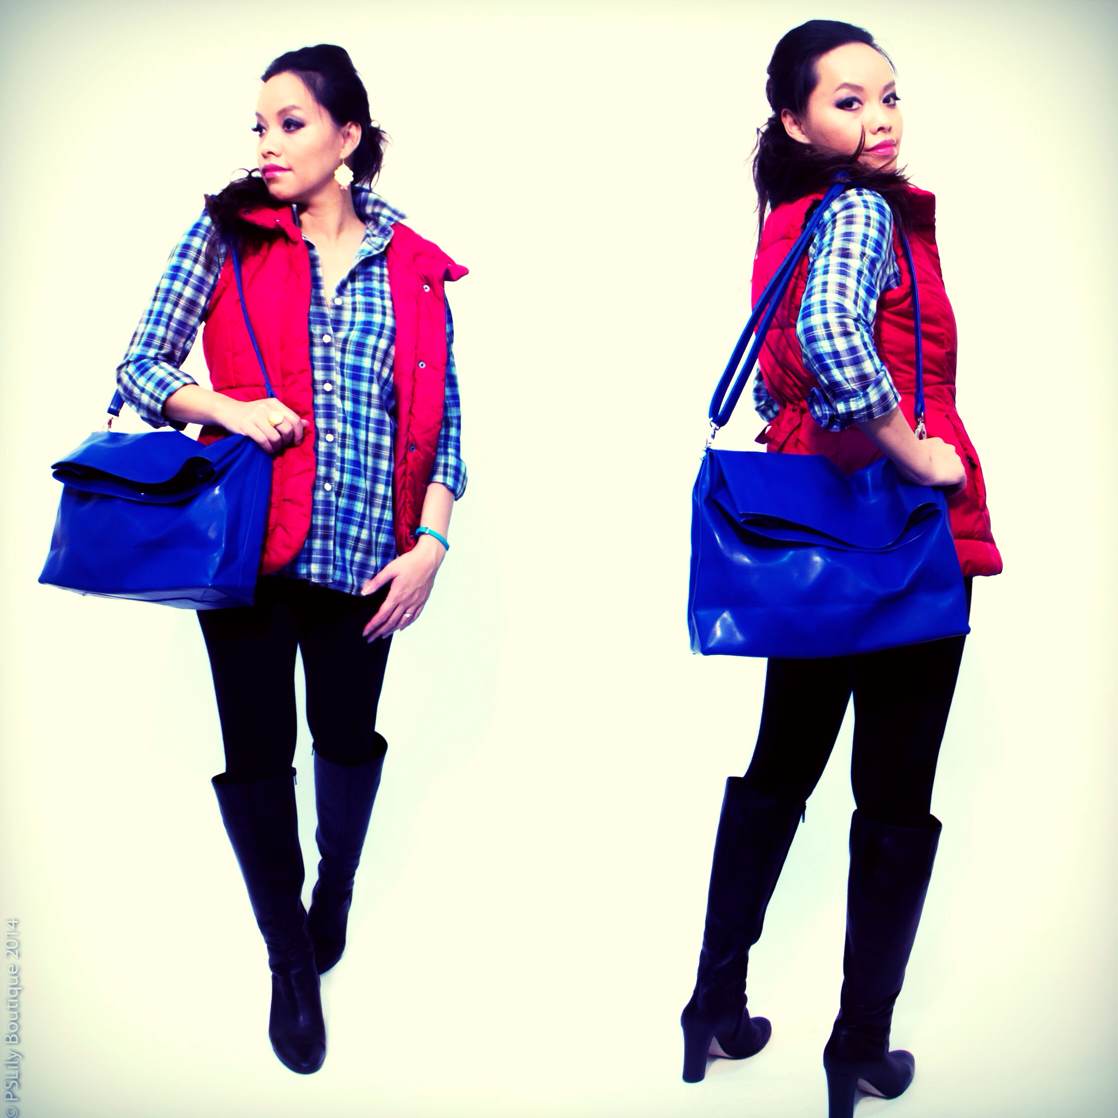 red puffer vest, blue plaid shirt, blue bag, black boots